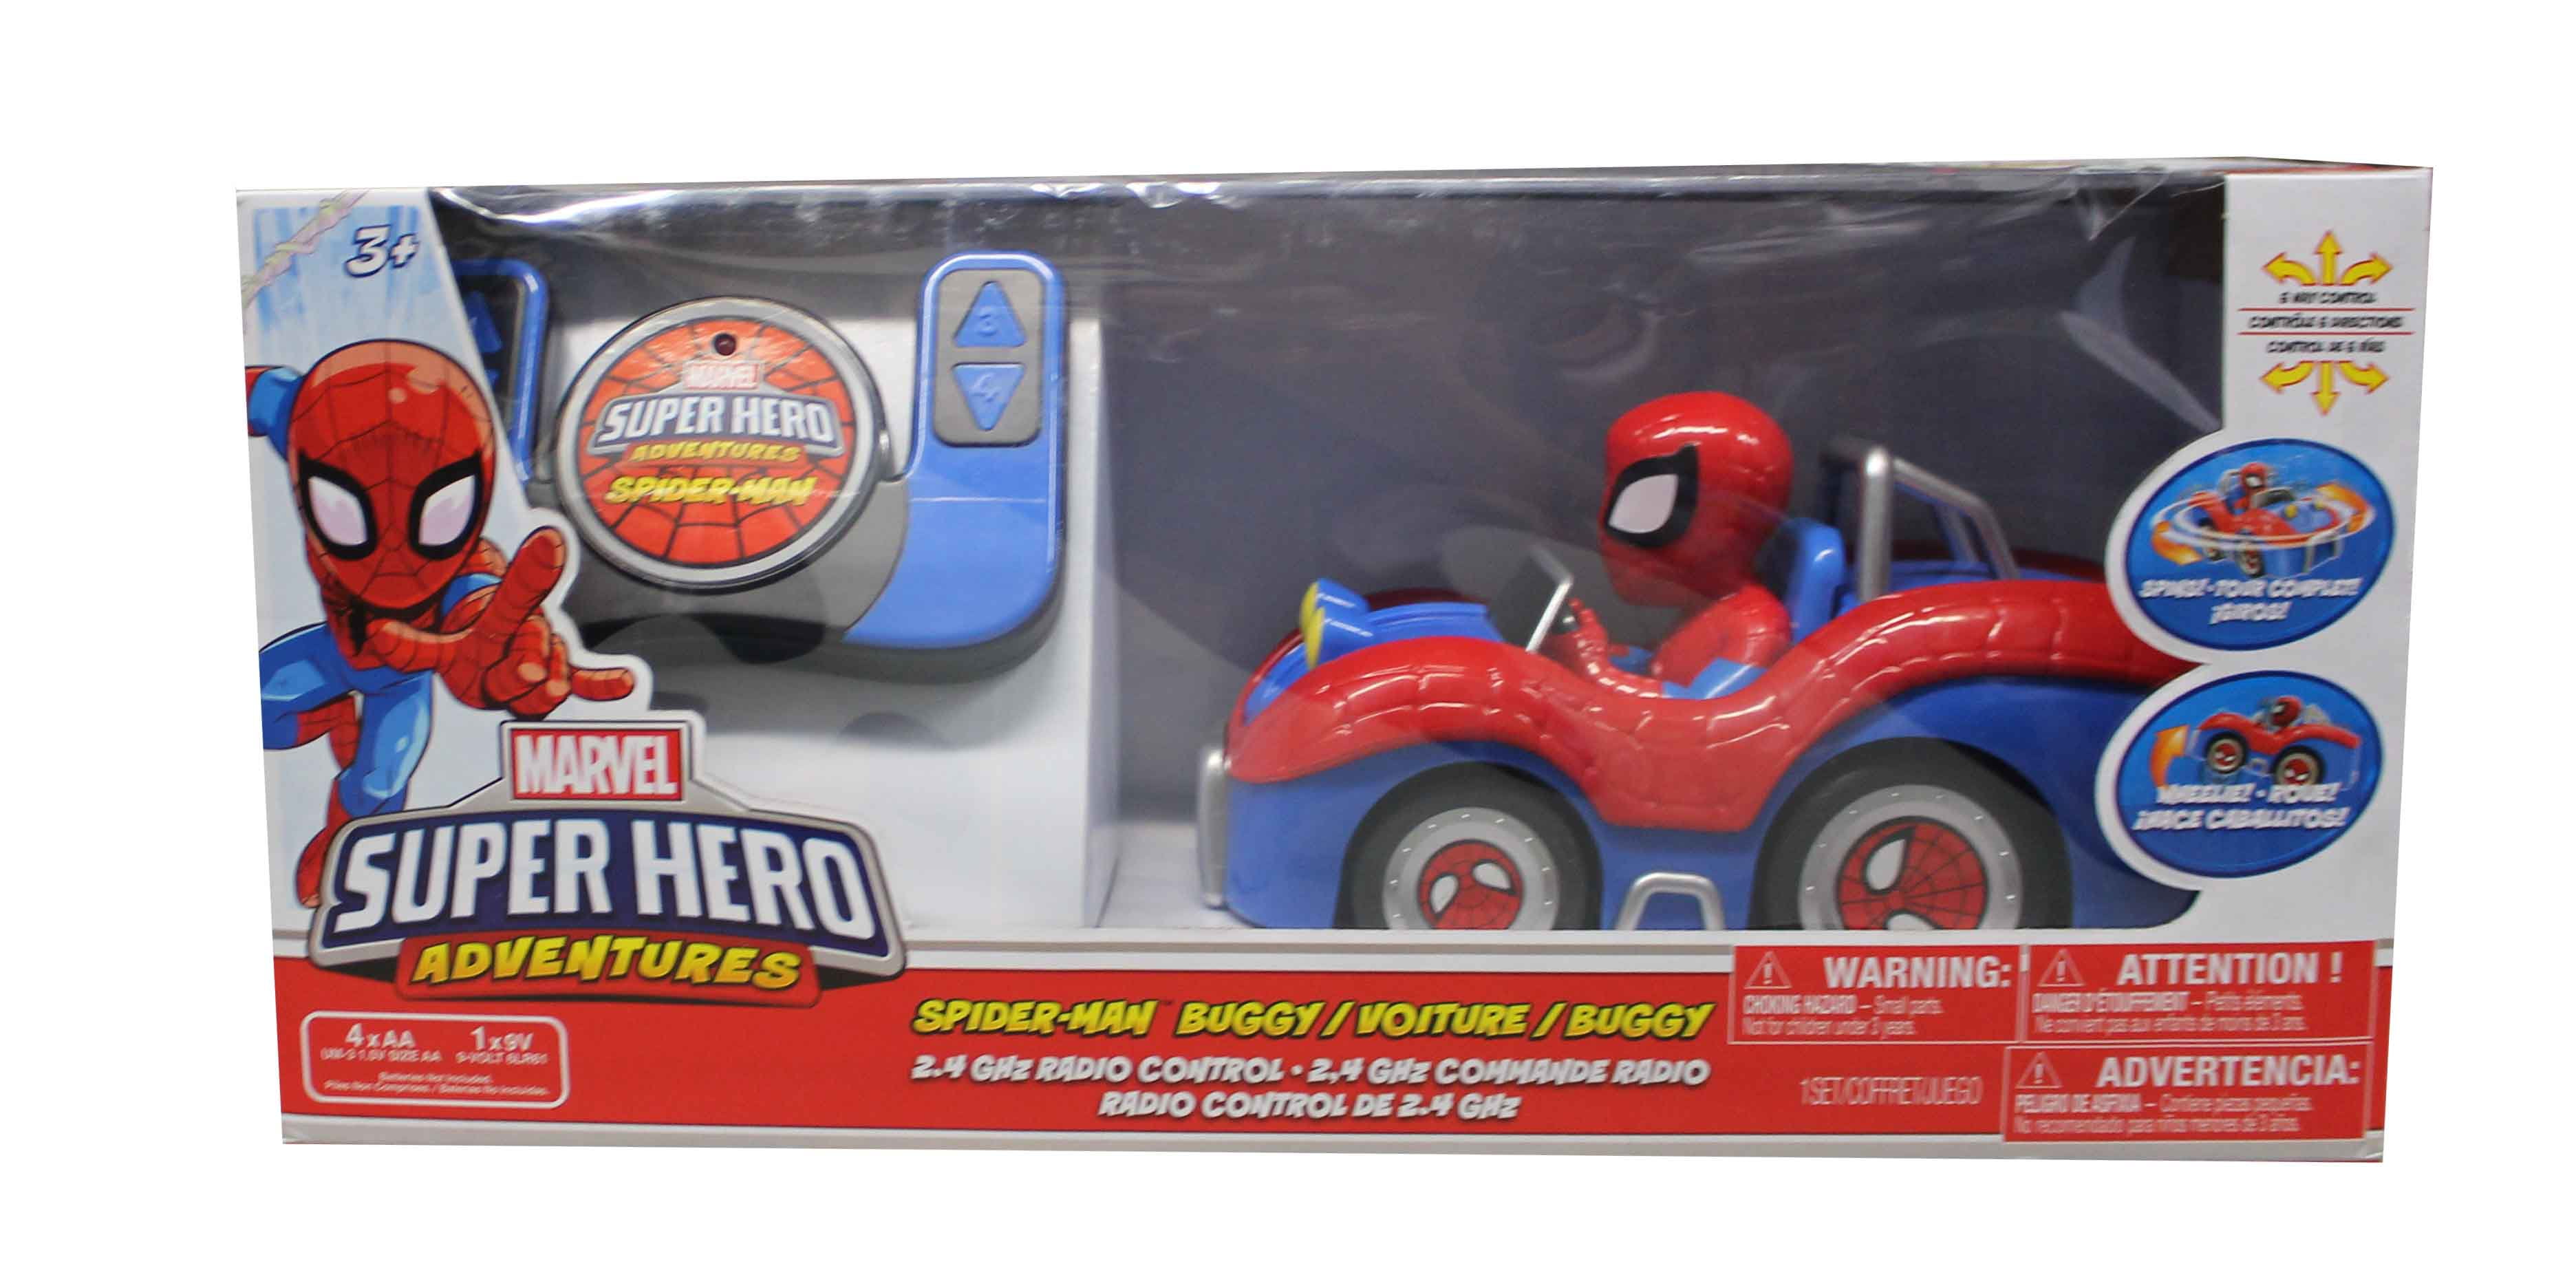 Bricks educational toys Speed Storm Racing spider super man 6006 